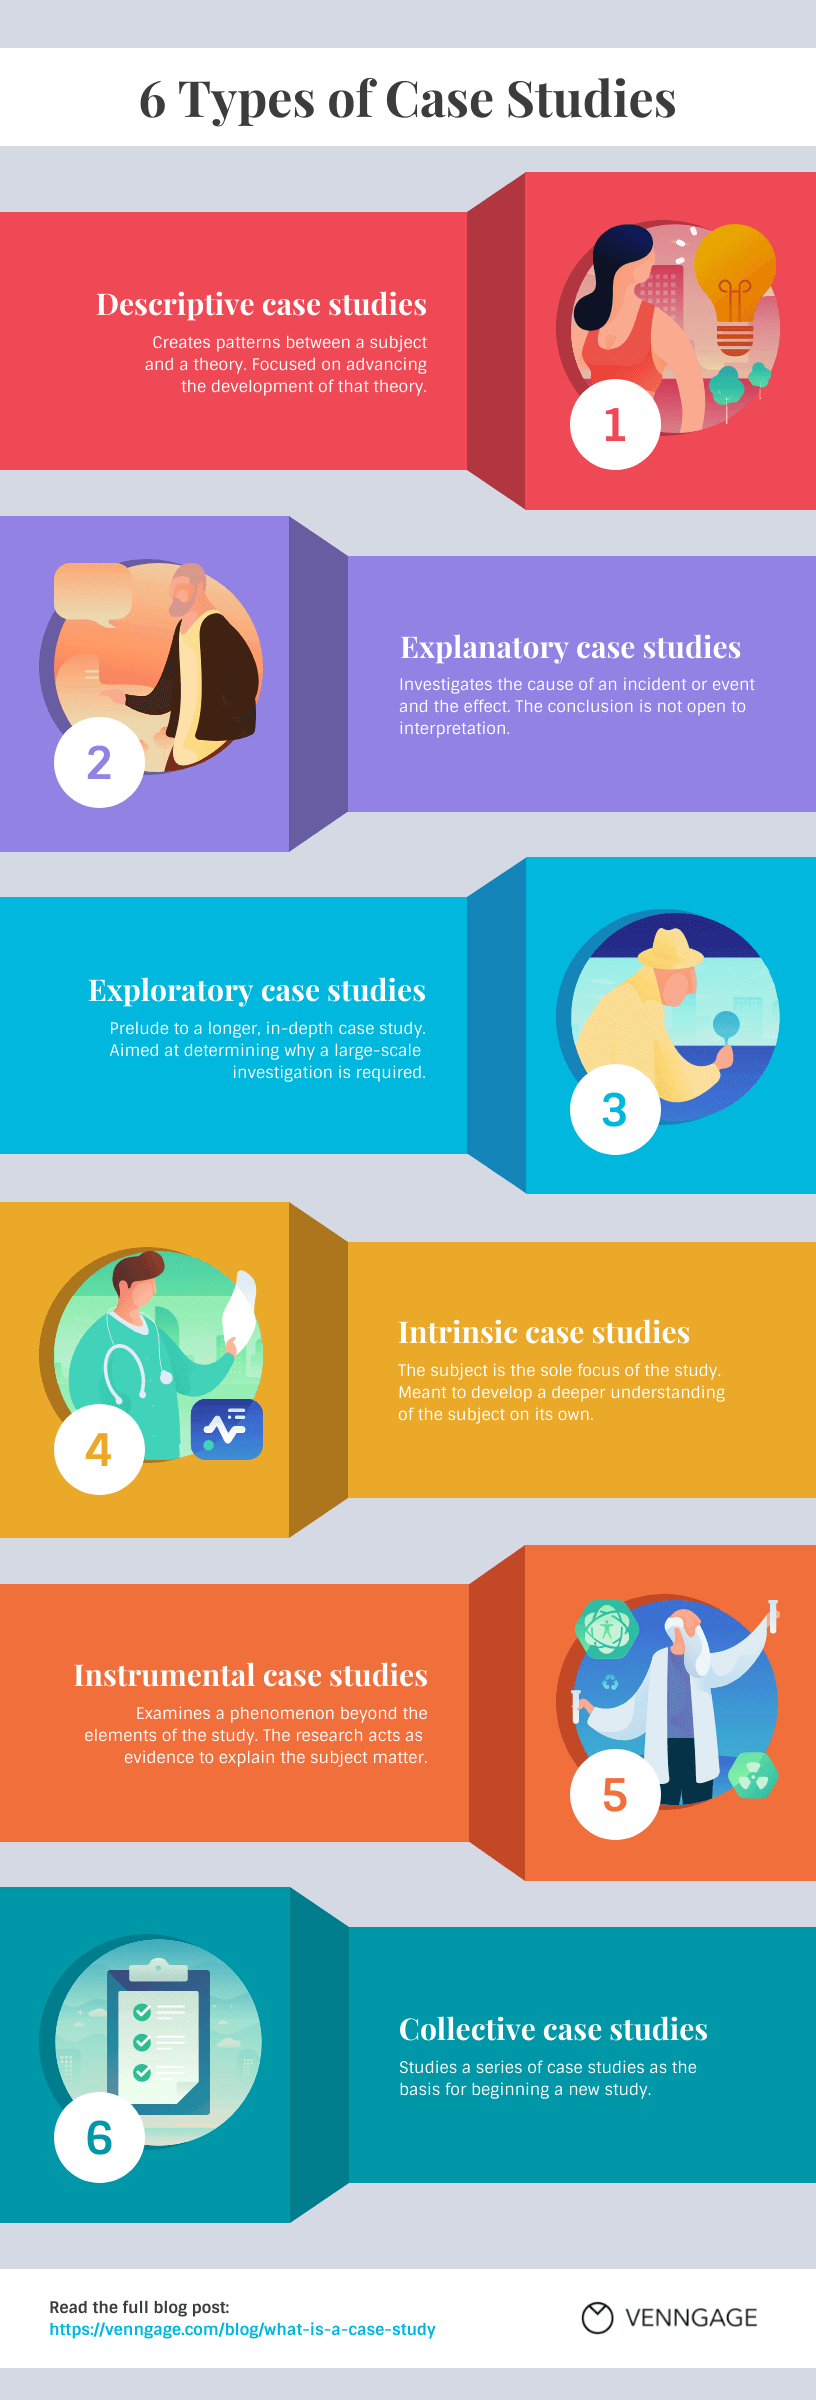 types of case studies infographic summary